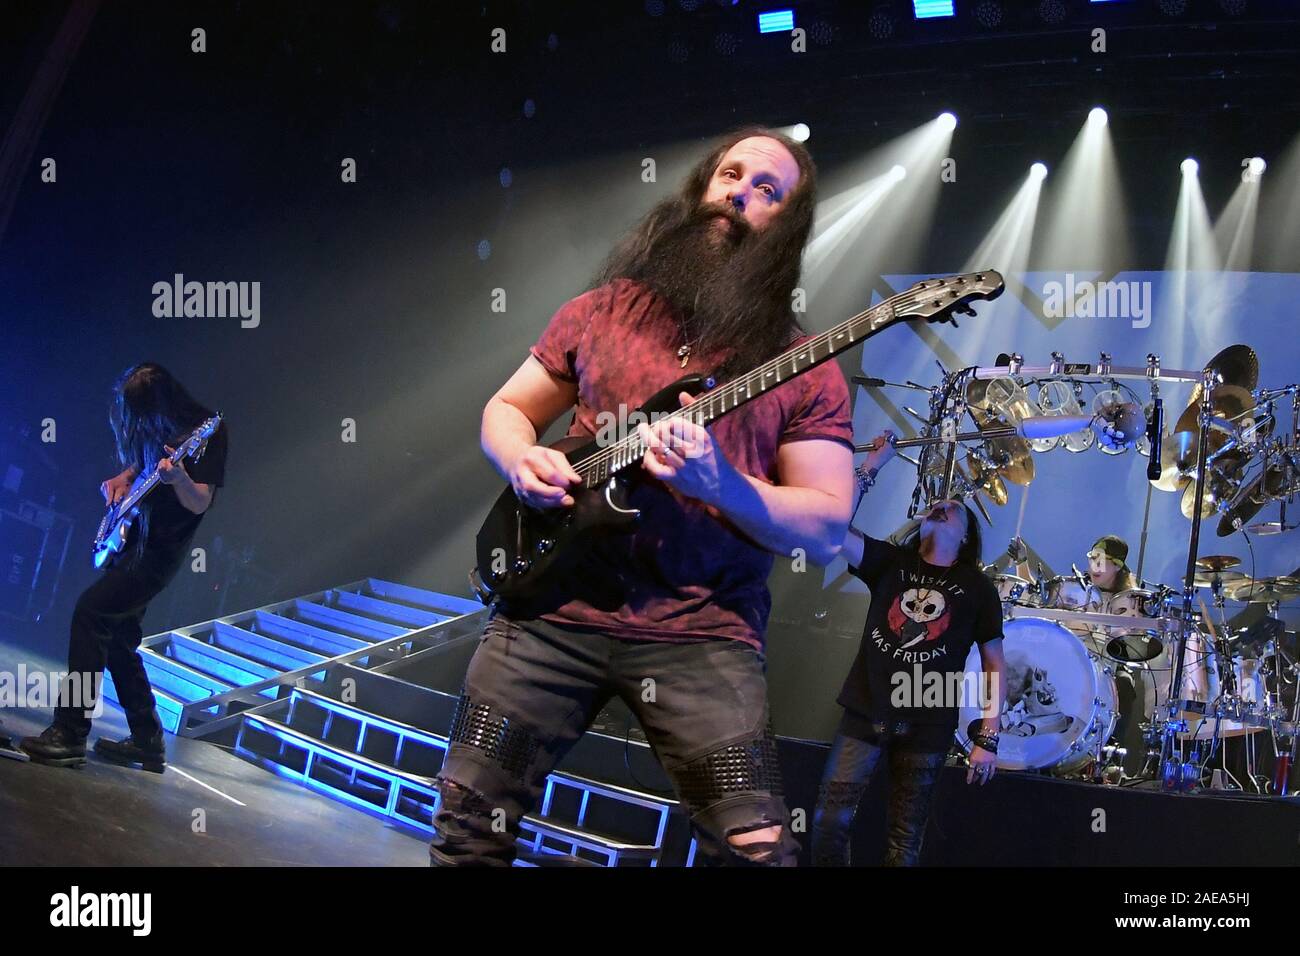 Rio de Janeiro, Brazil, December 6, 2019. Guitarist John Petrucci of the progressive metal band Dream Theater during a concert in Rio de Janeiro. Stock Photo